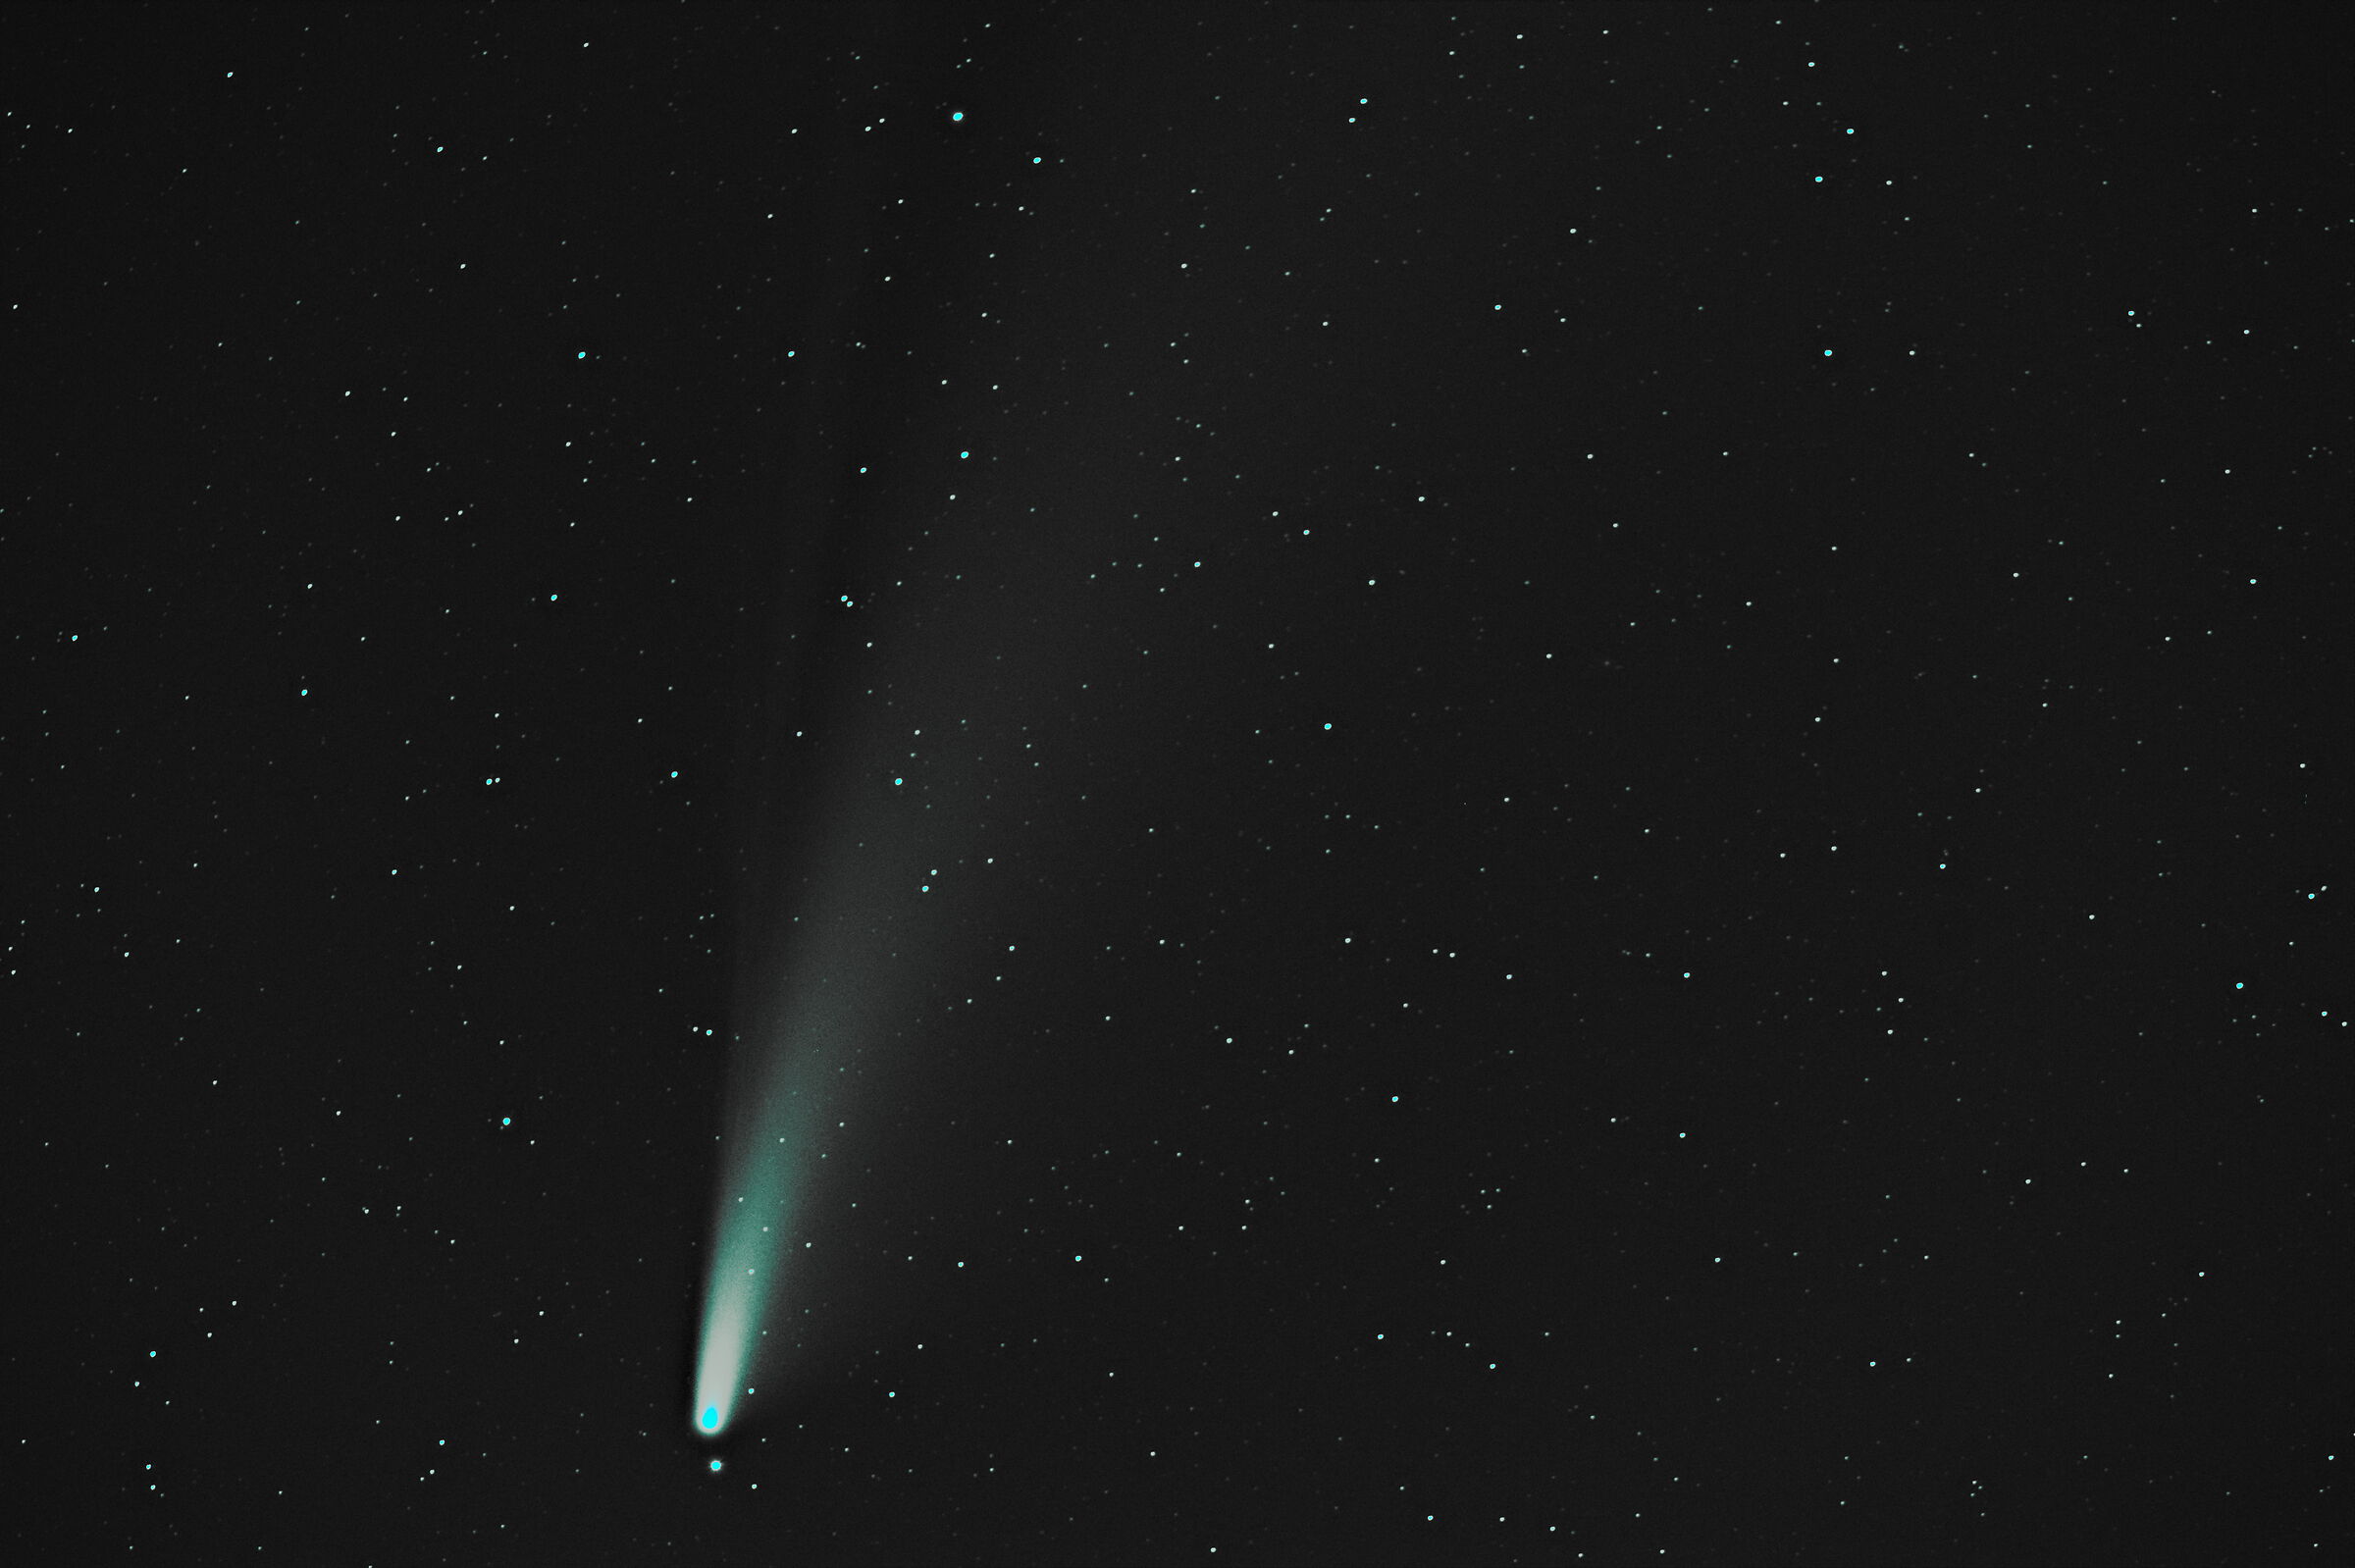 Cometa c/2020 F3 Neowise...